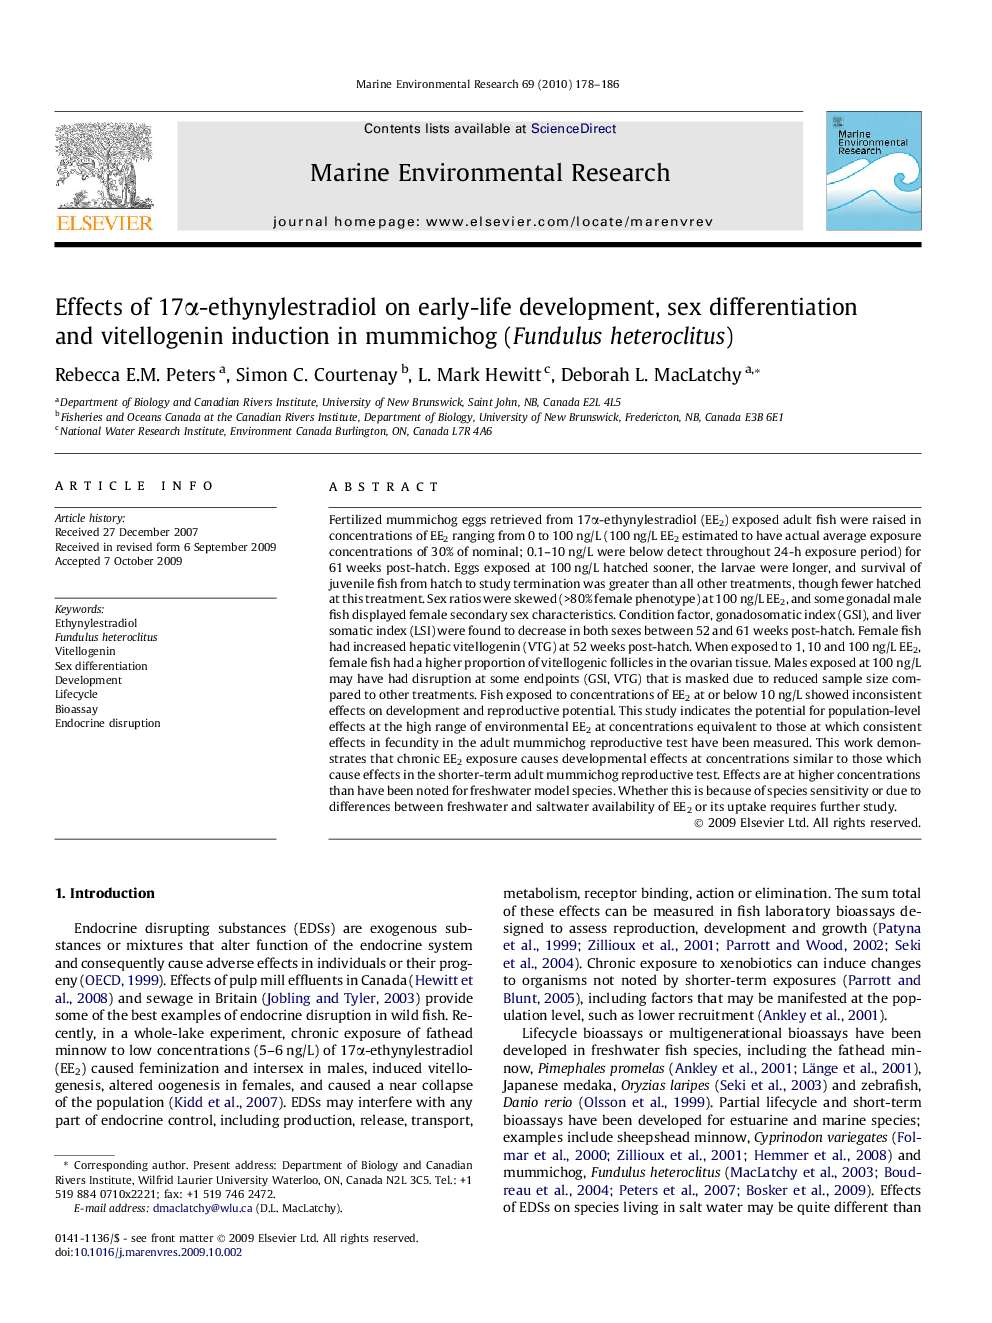 Effects of 17α-ethynylestradiol on early-life development, sex differentiation and vitellogenin induction in mummichog (Fundulus heteroclitus)